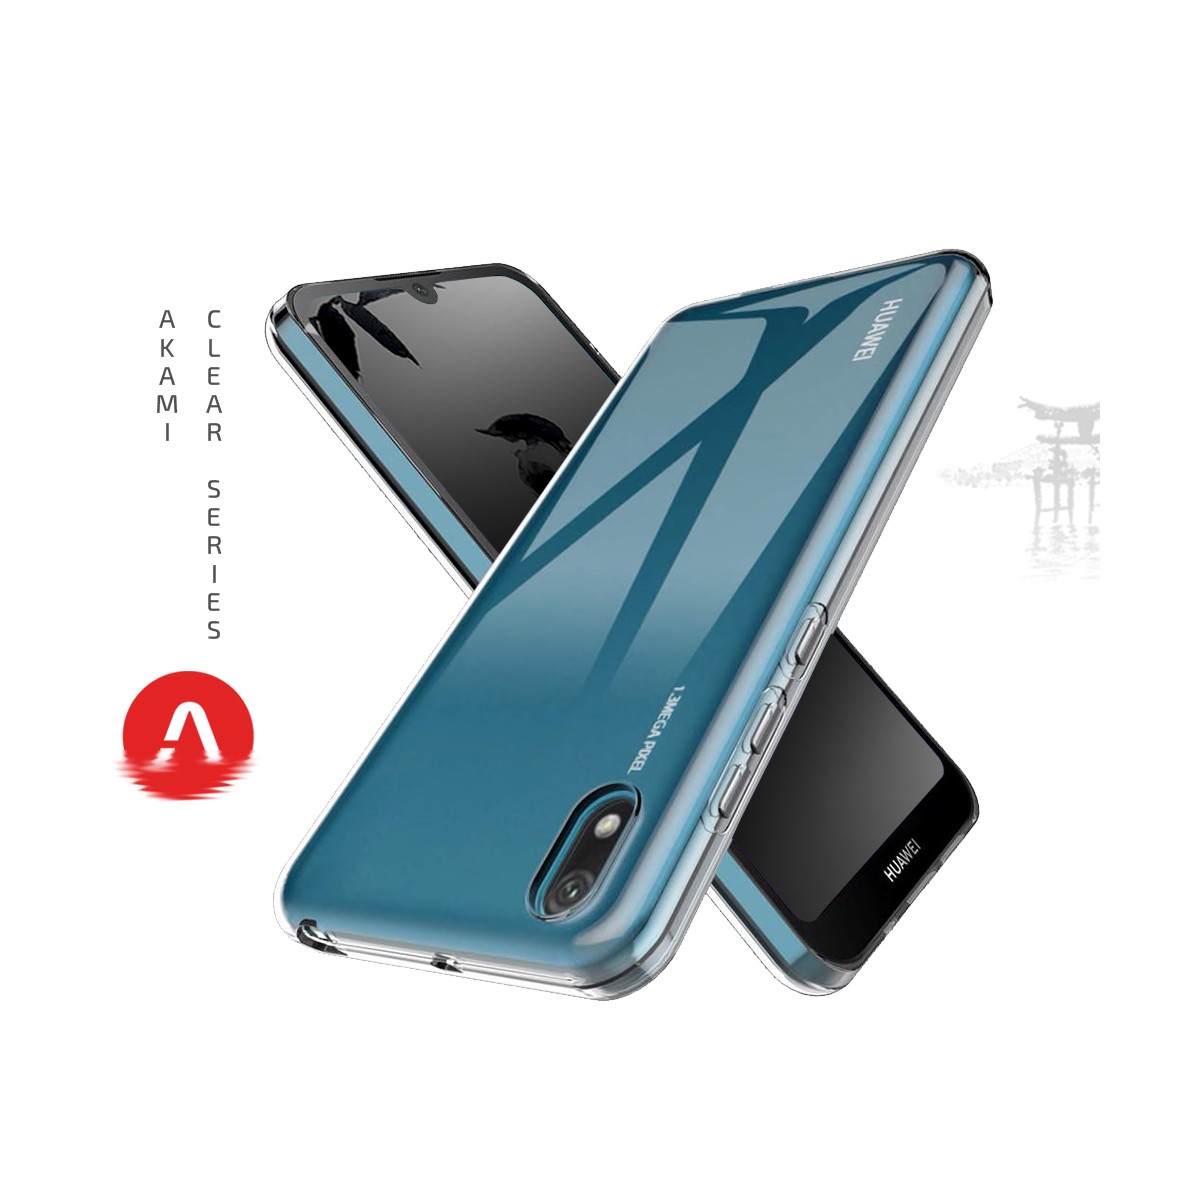 Akami coque transparente pour Huawei Y5 2019 en silicone de haute qualité